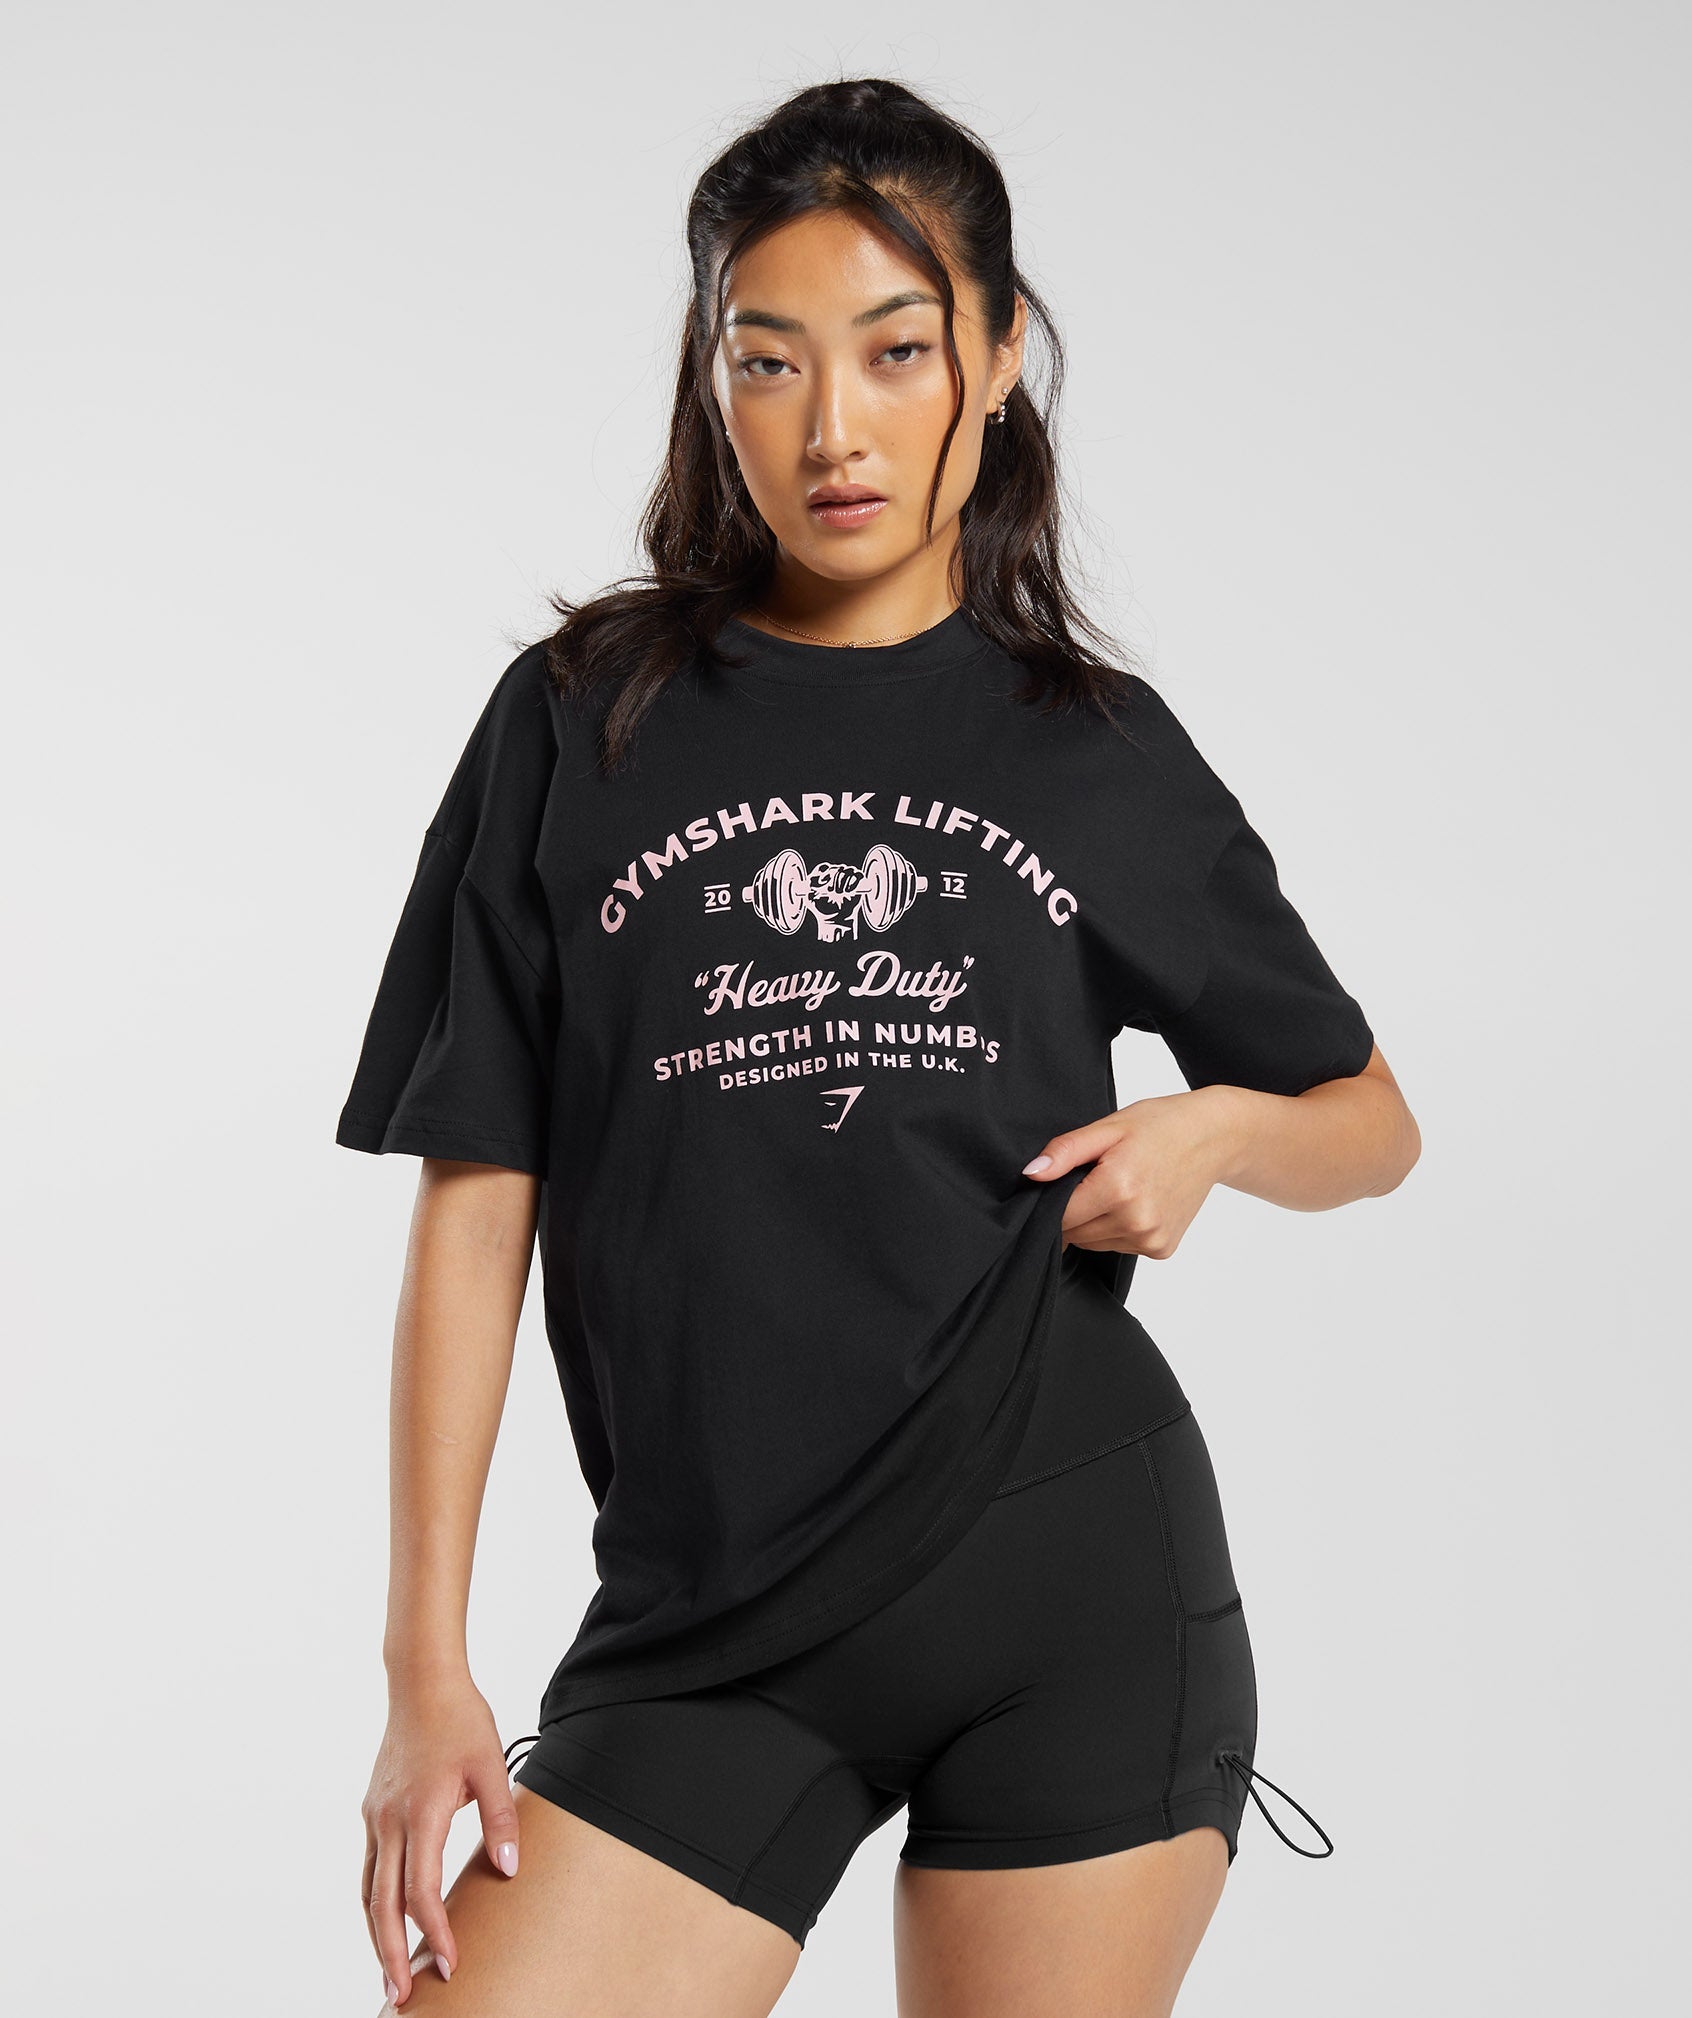 Gymshark Women's Training Alone Graphic T-Shirt, Black, Medium